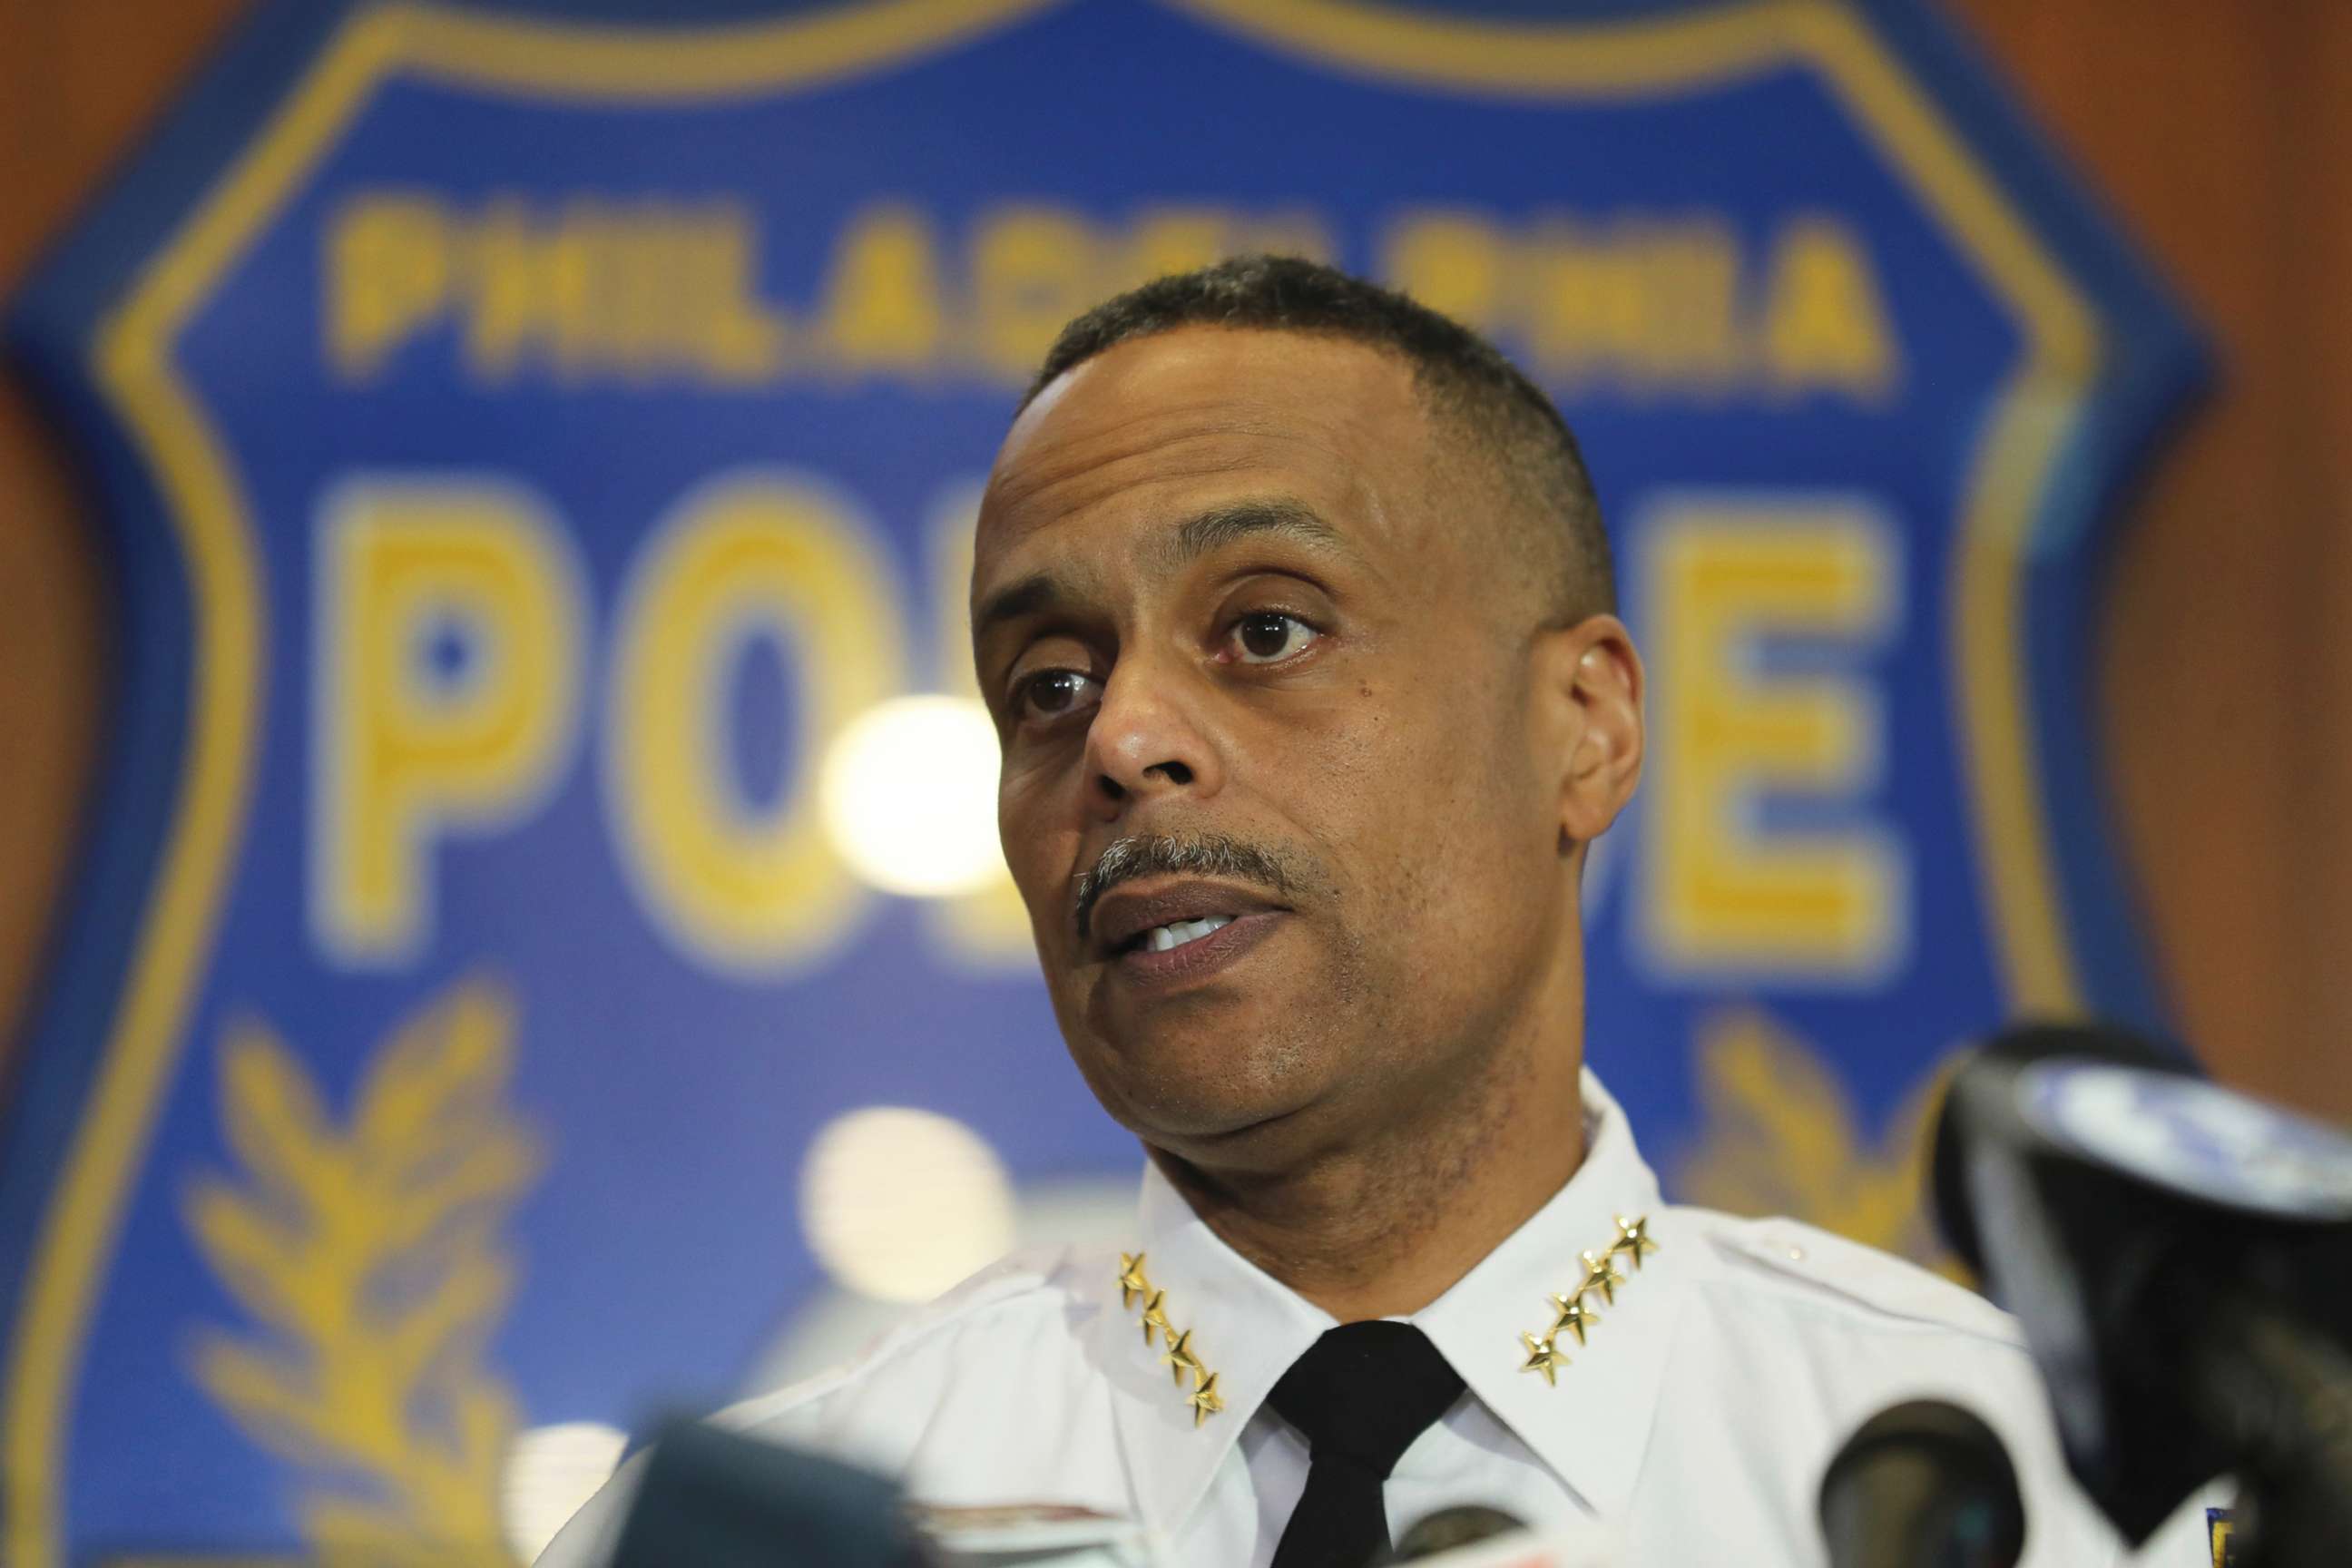 Philadelphia Police Commissioner Richard Ross speaks to the media during a press conference on April 19, 2018 in Philadelphia. 